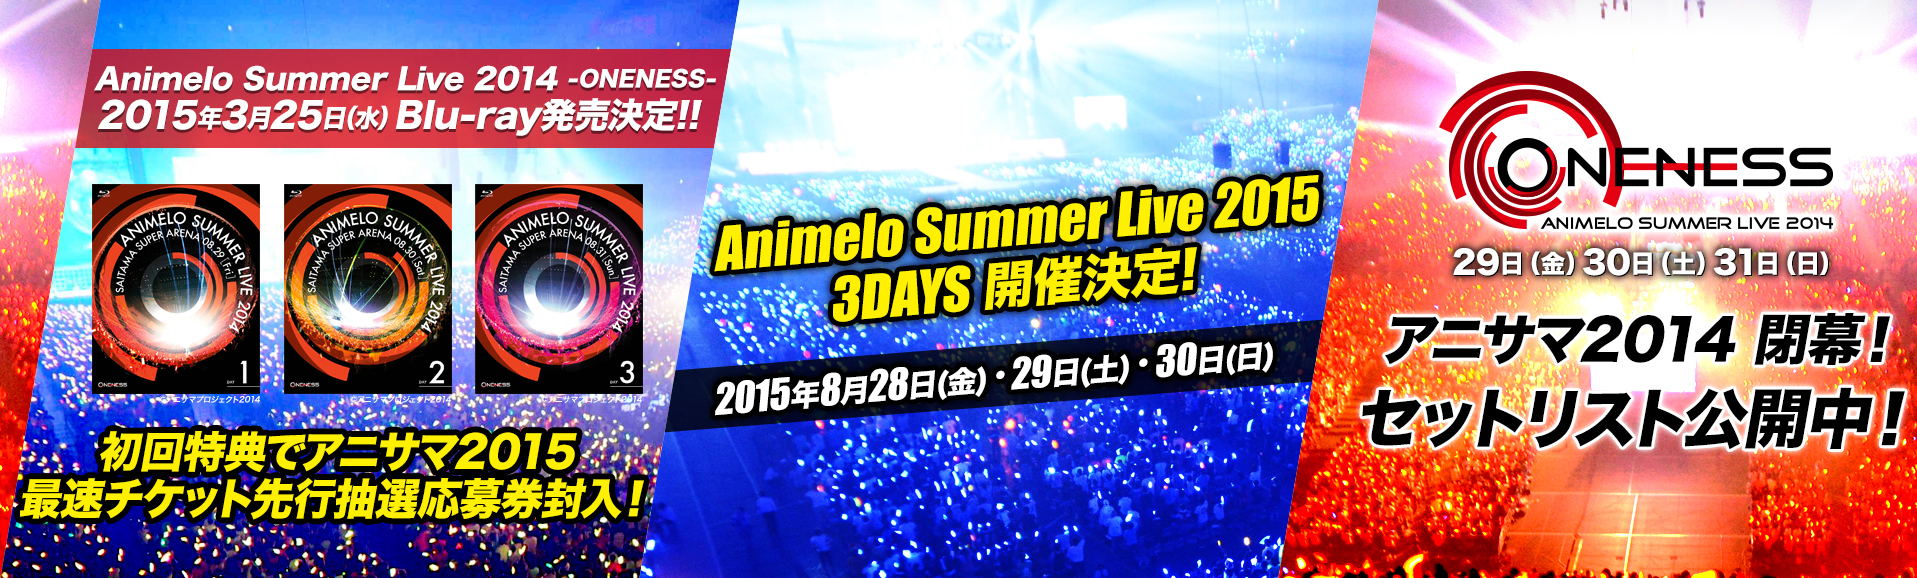 Animelo Summer Live 14 Oneness アニメロサマーライブ14